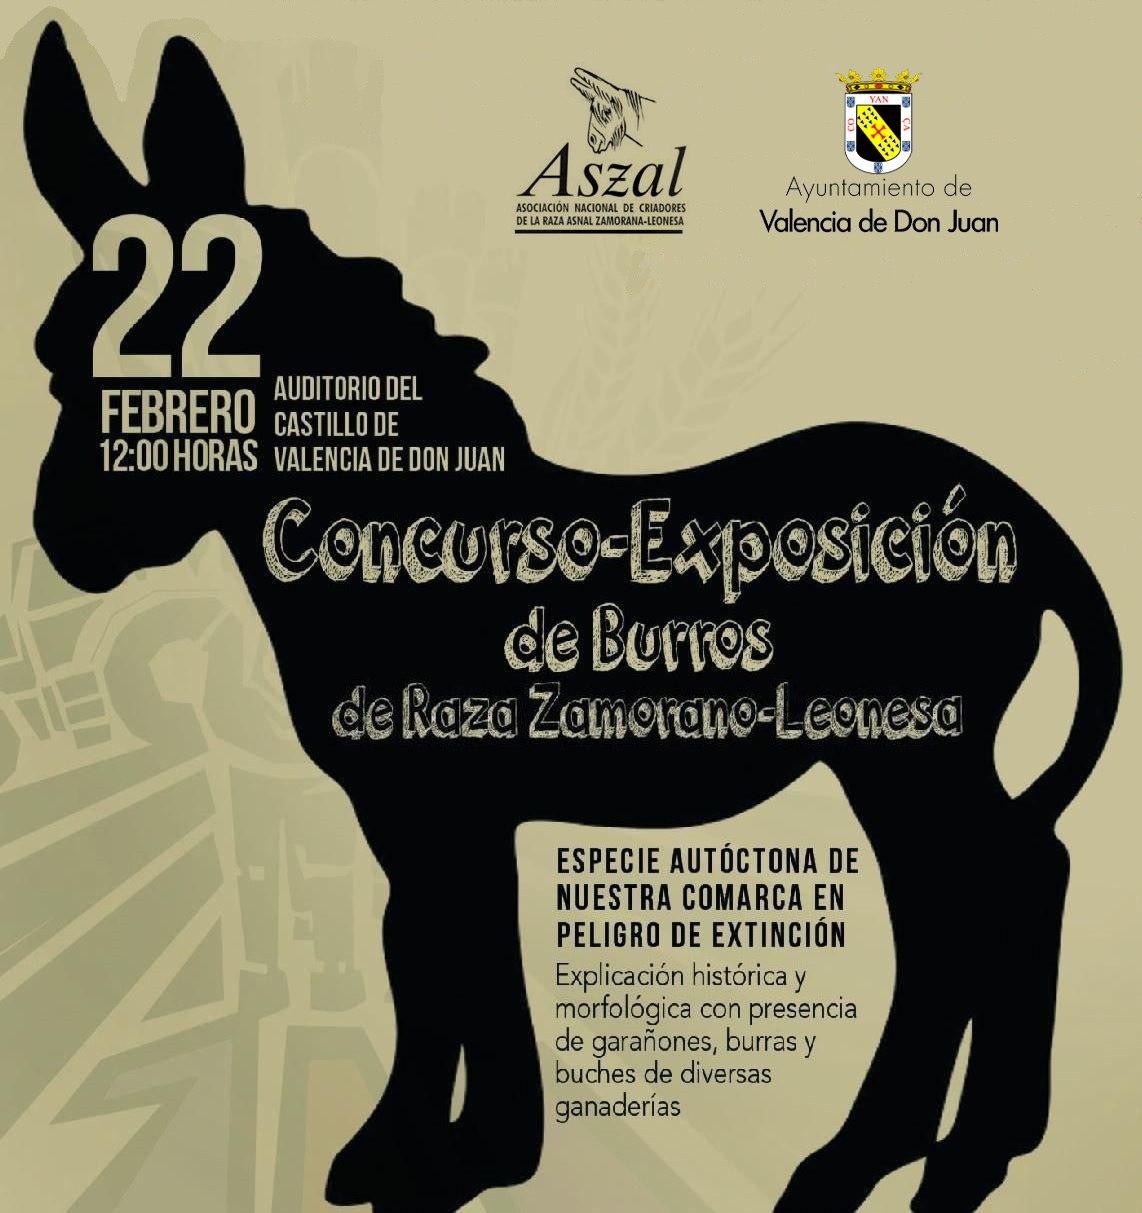 Concursos-Exposición de Burros Zamorano-leoneses